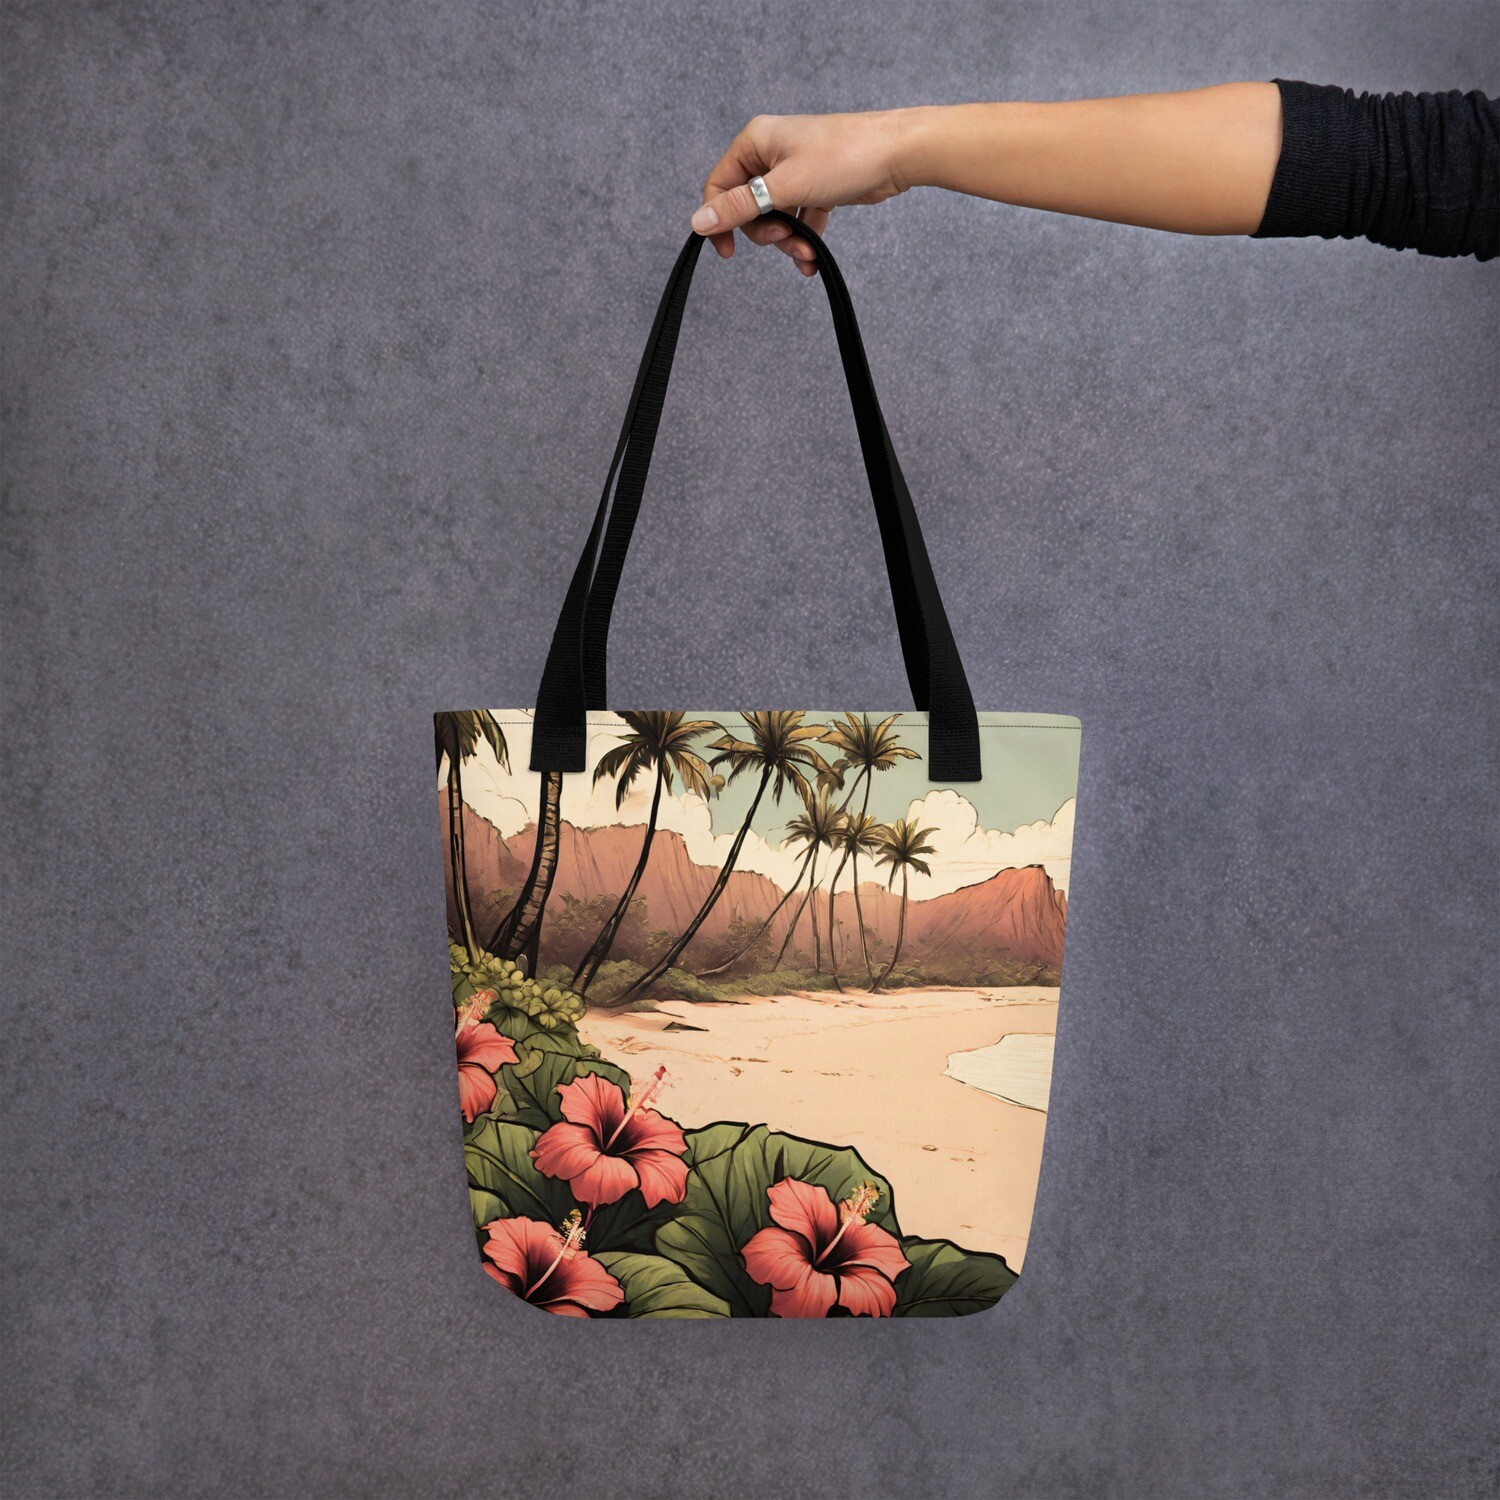 Tote bag with Hawaiian landscape digital illustration